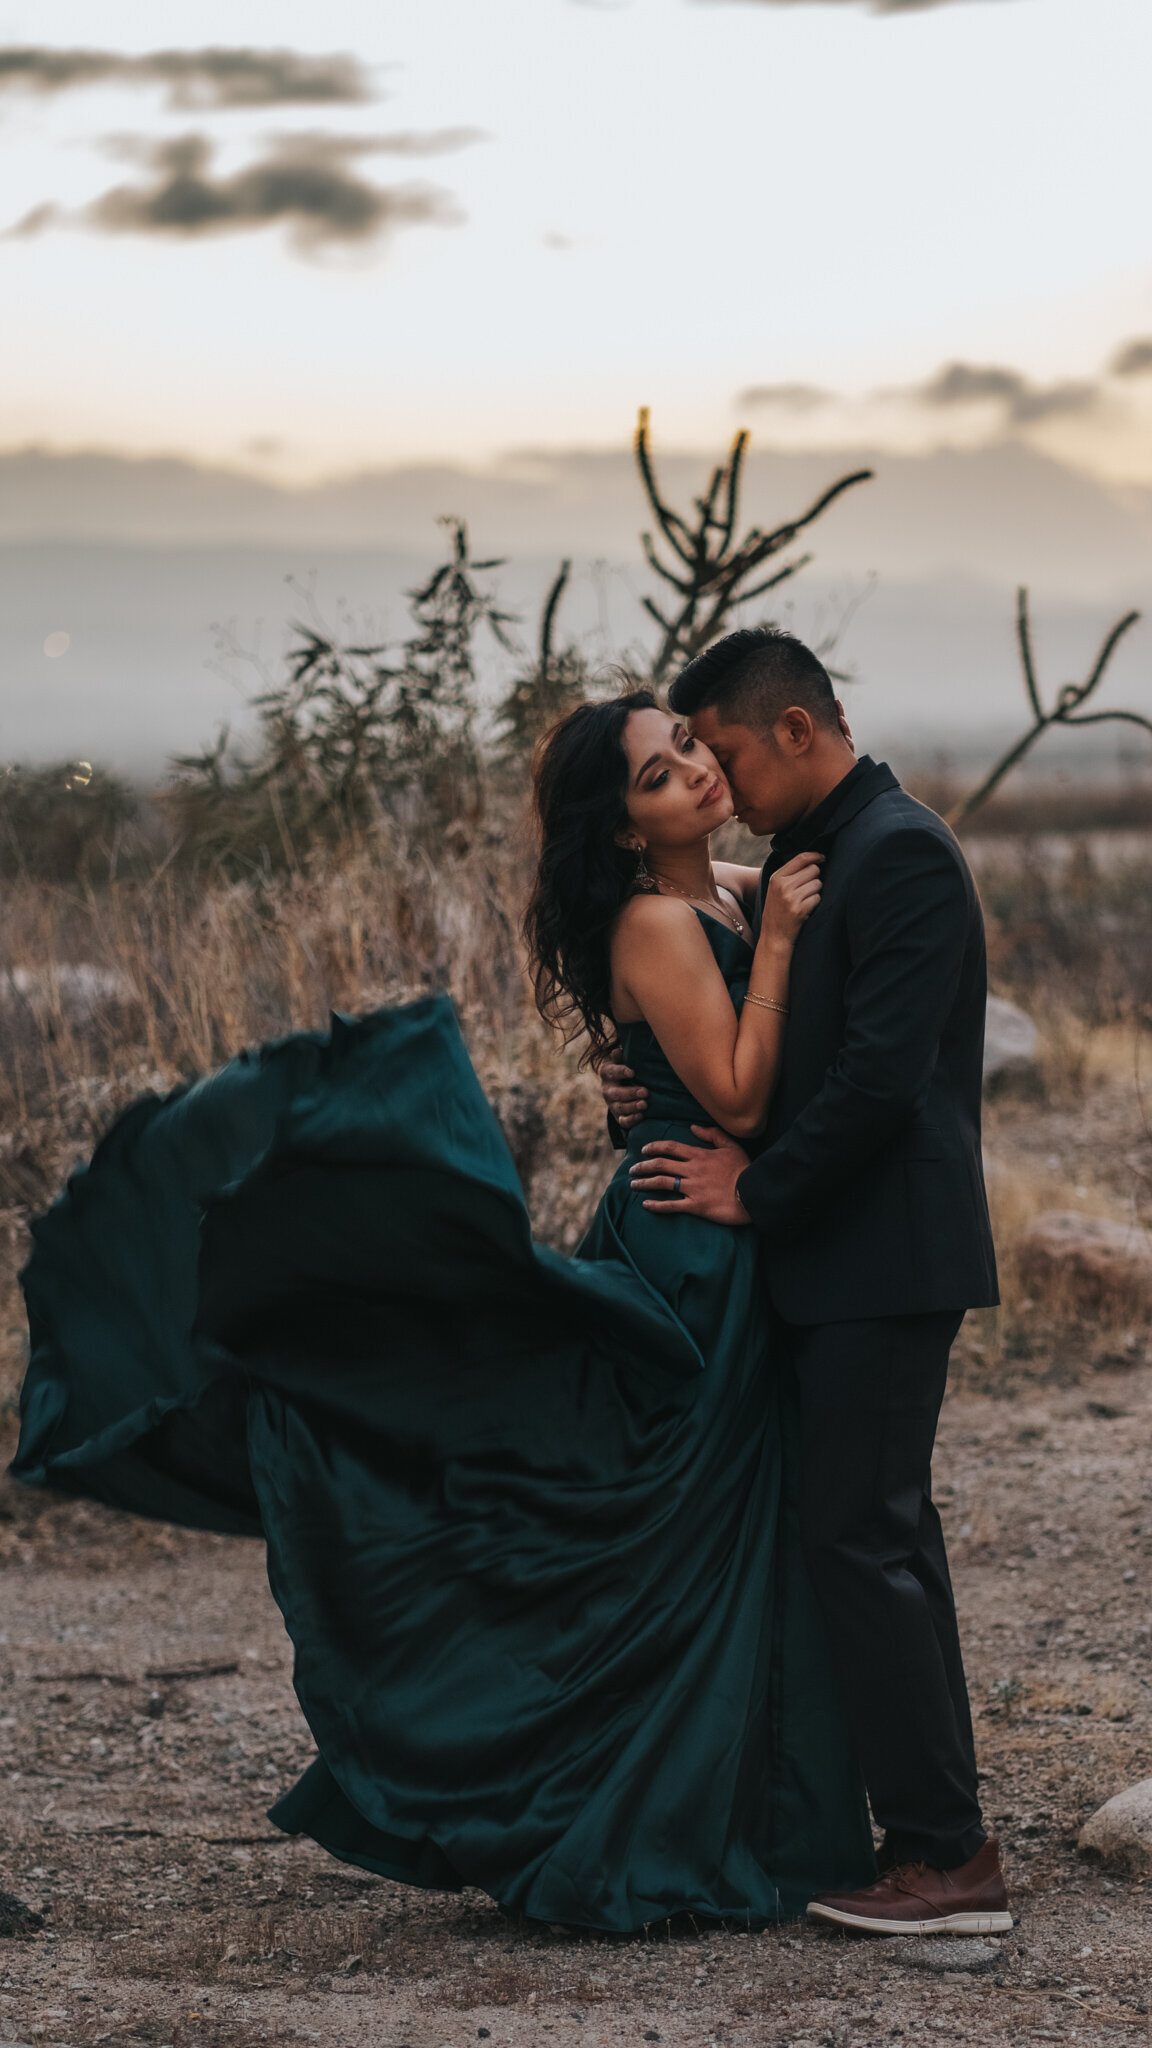 dancing-couples-portrait-engagement-greenspot-highland-california